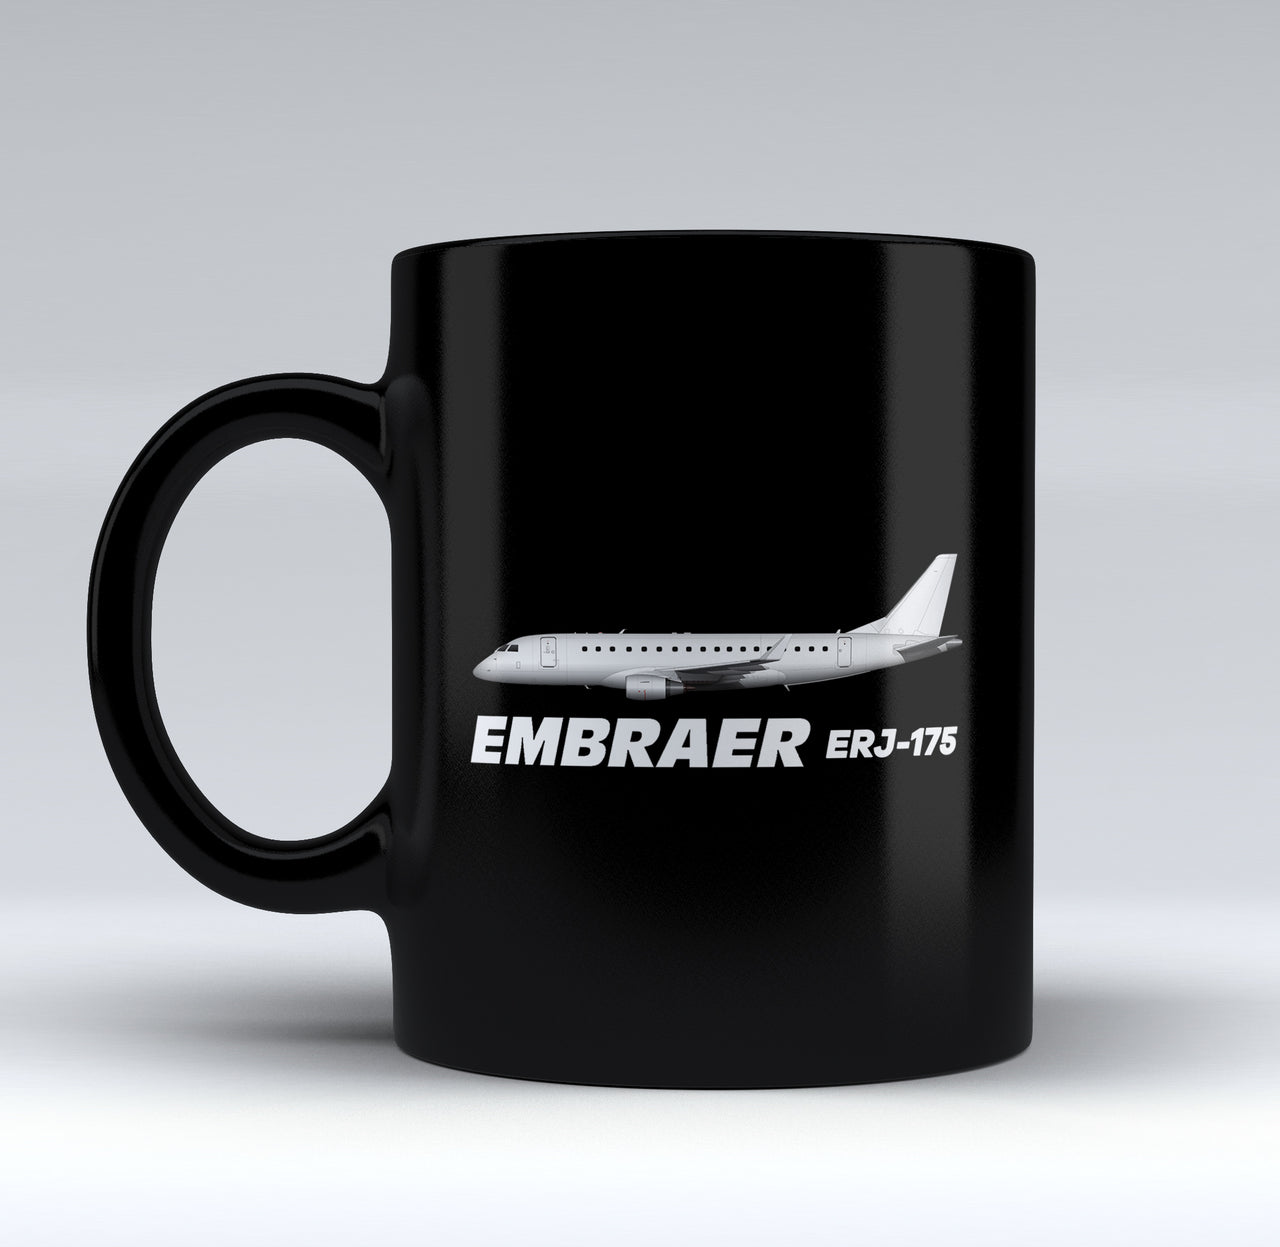 The Embraer ERJ-175 Designed Black Mugs